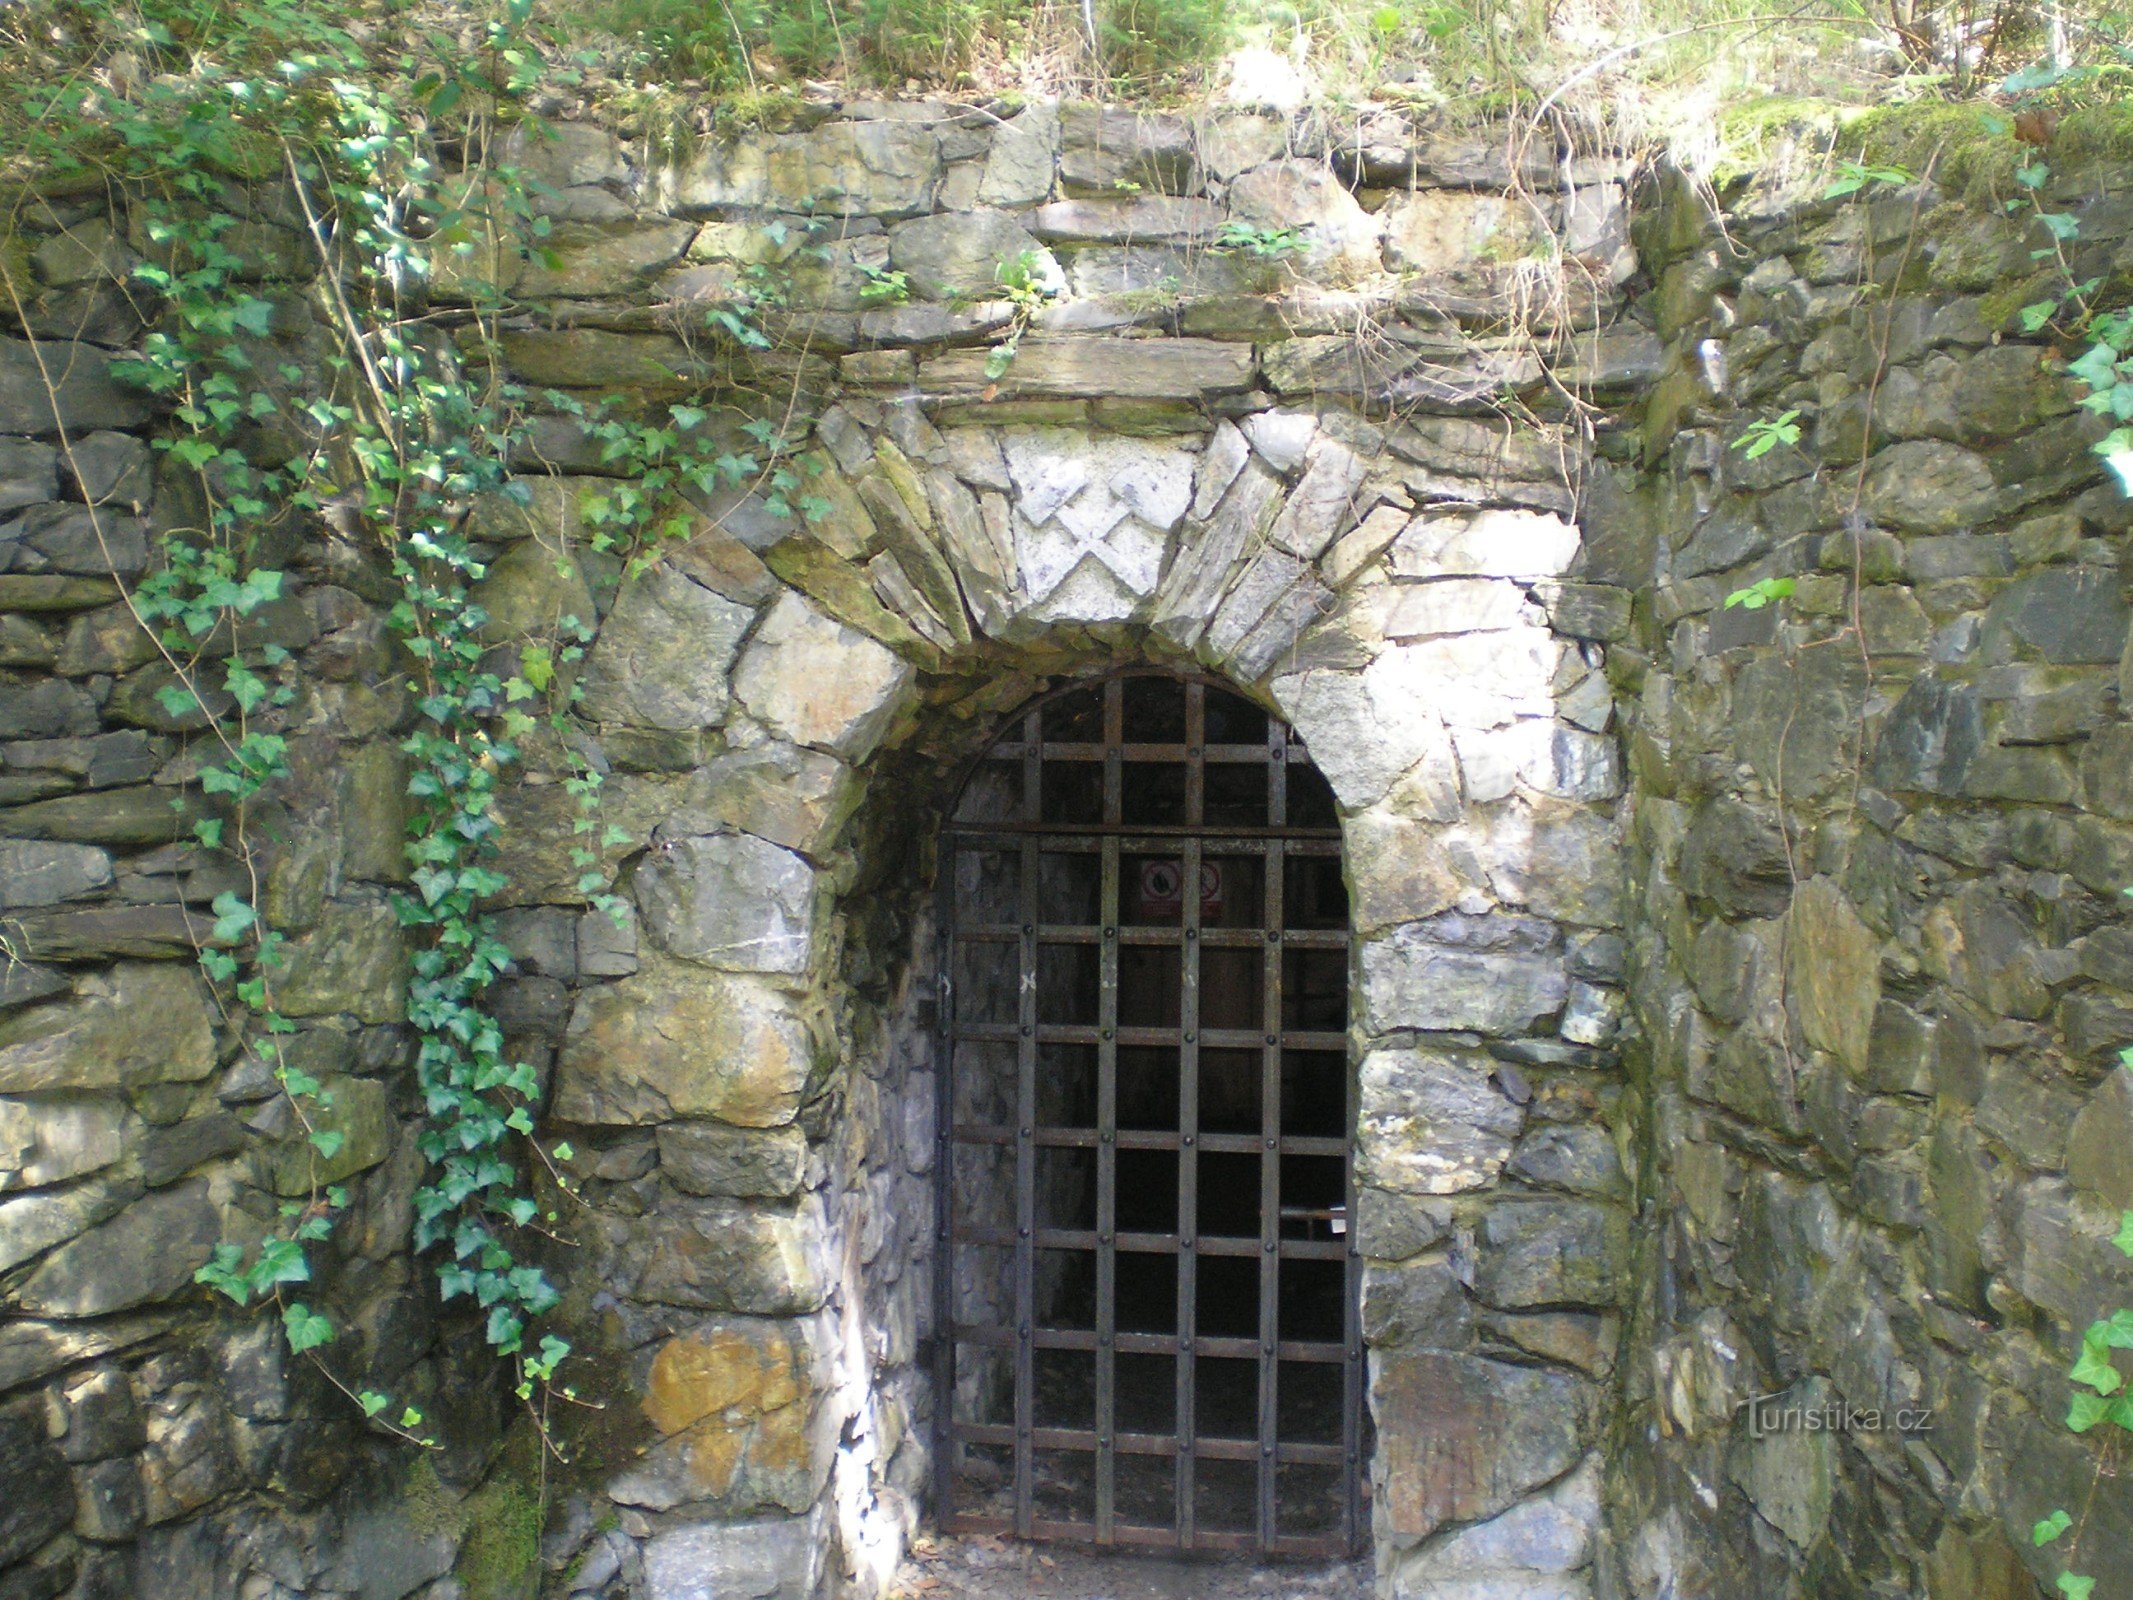 Tunnel entrance portal